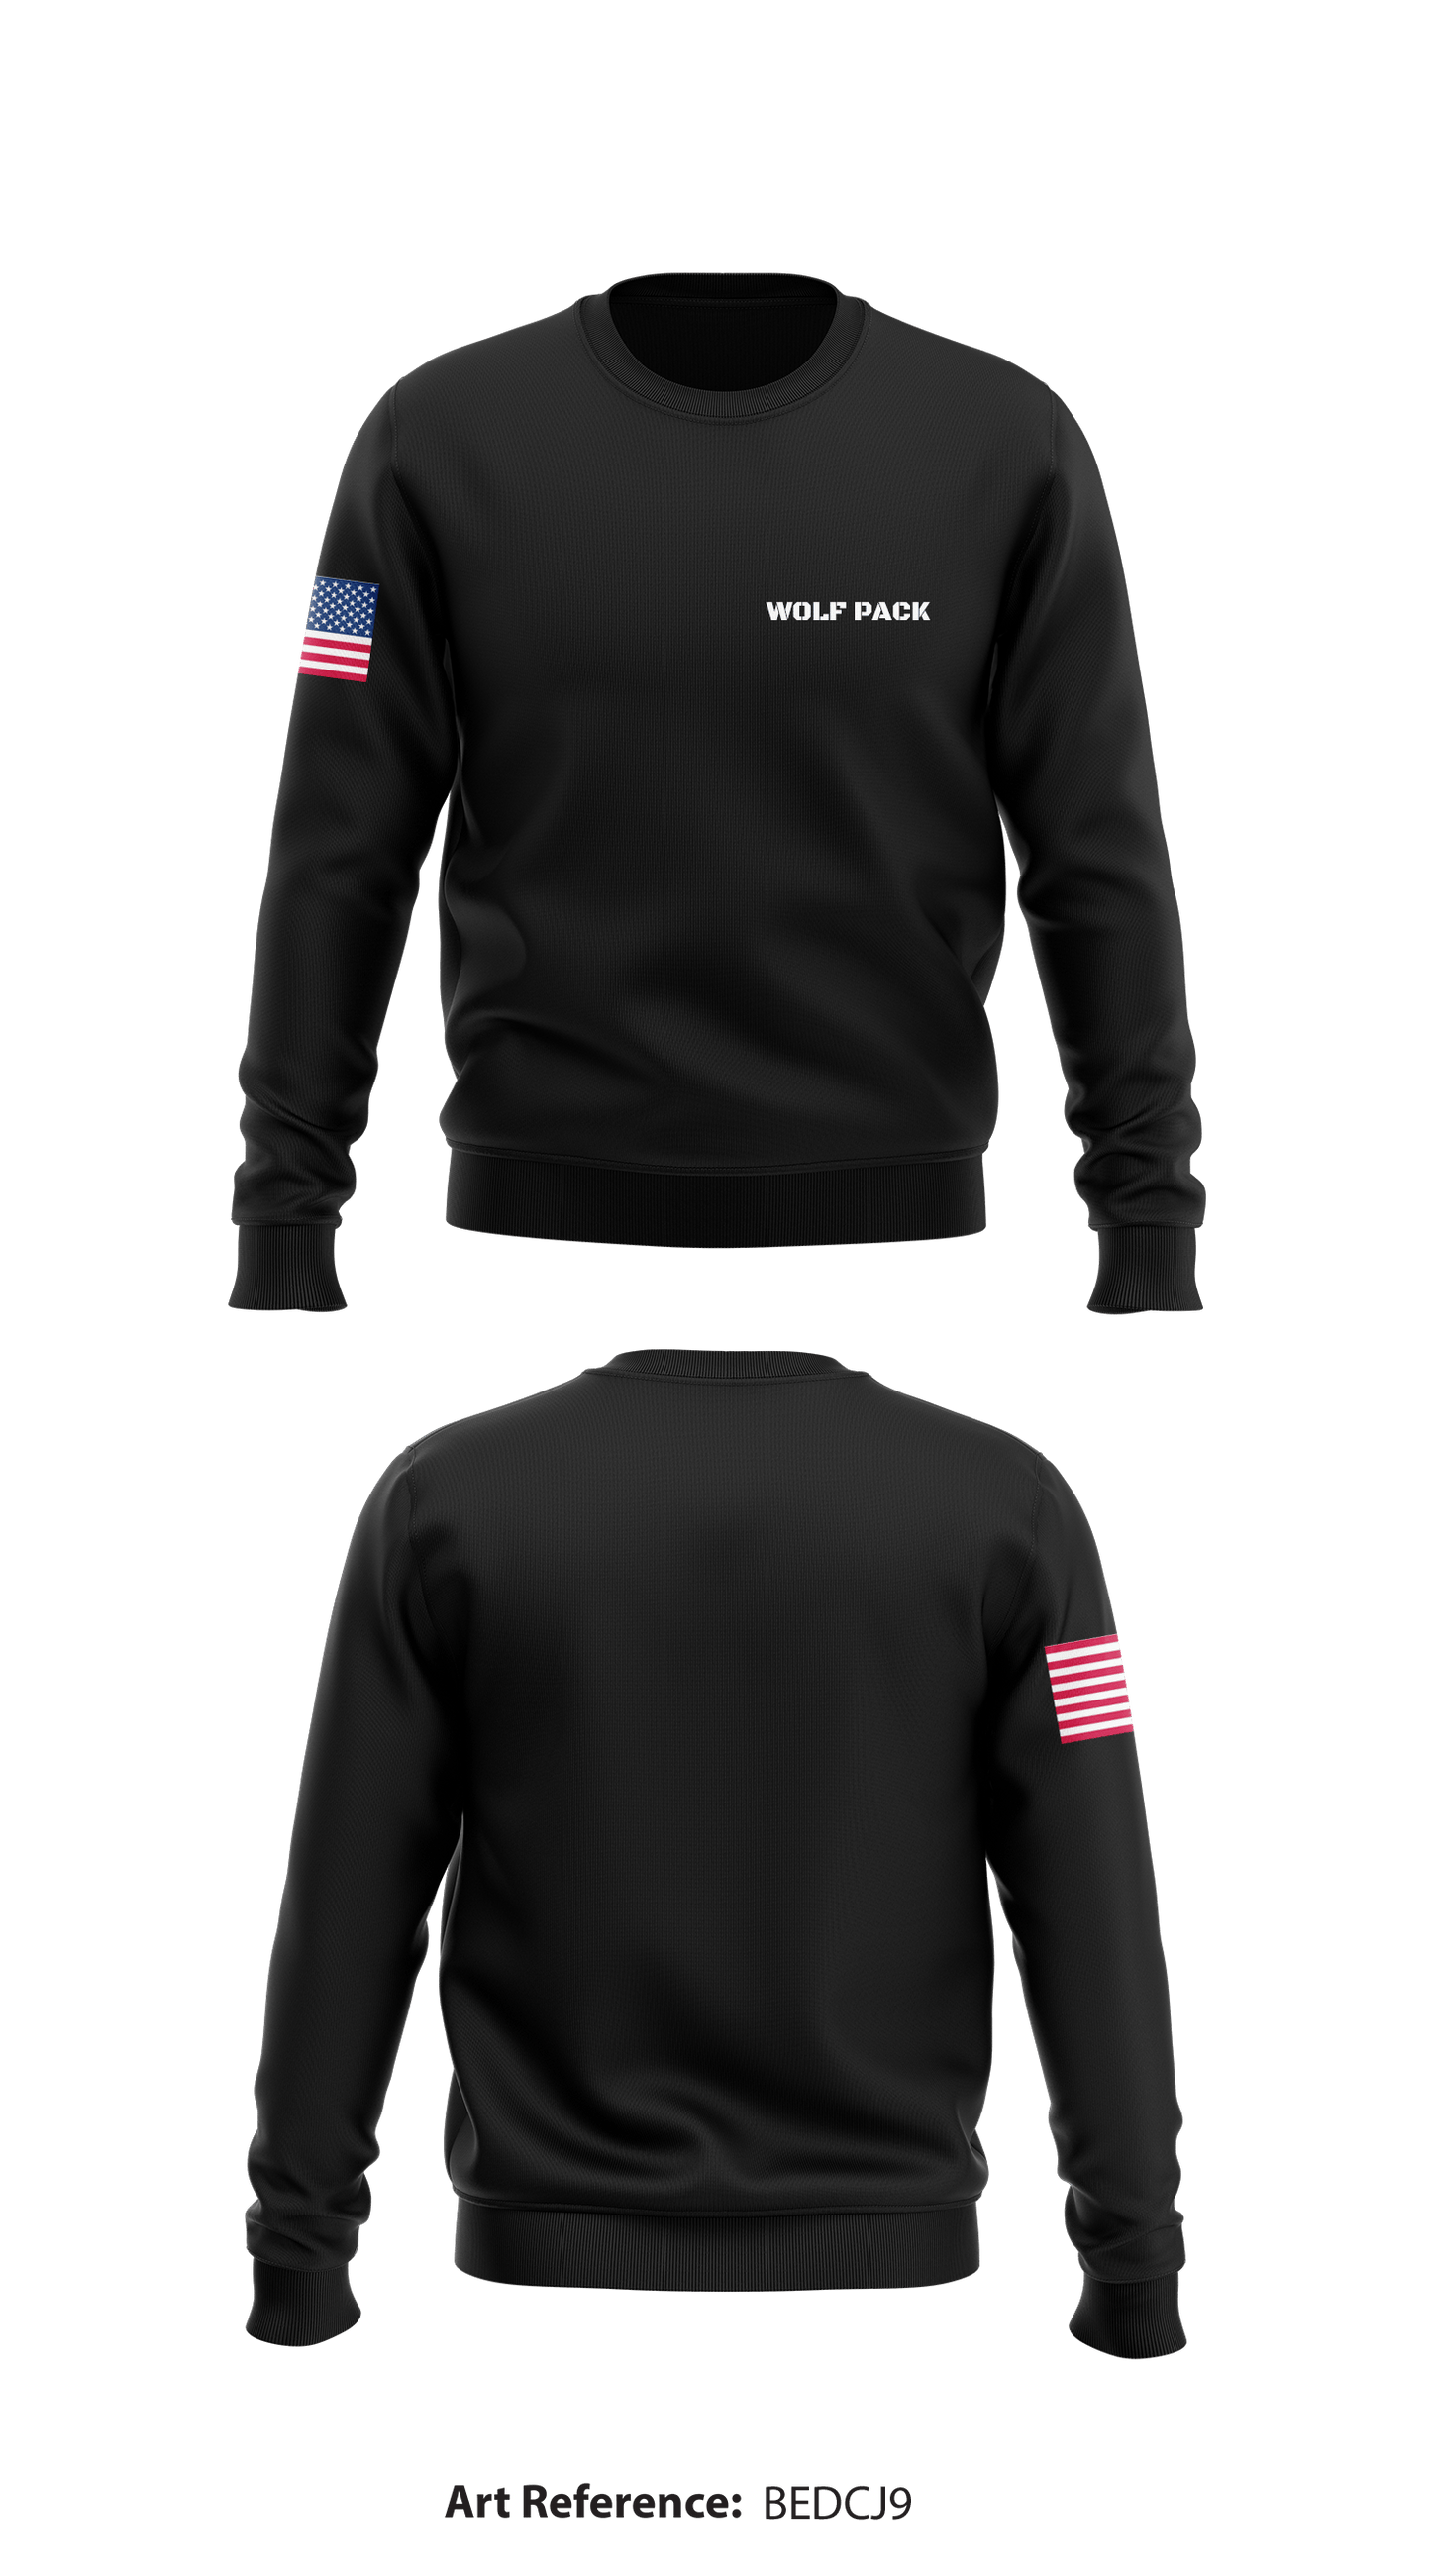 Wolf Pack Store 1 Core Men's Crewneck Performance Sweatshirt - bEdCj9